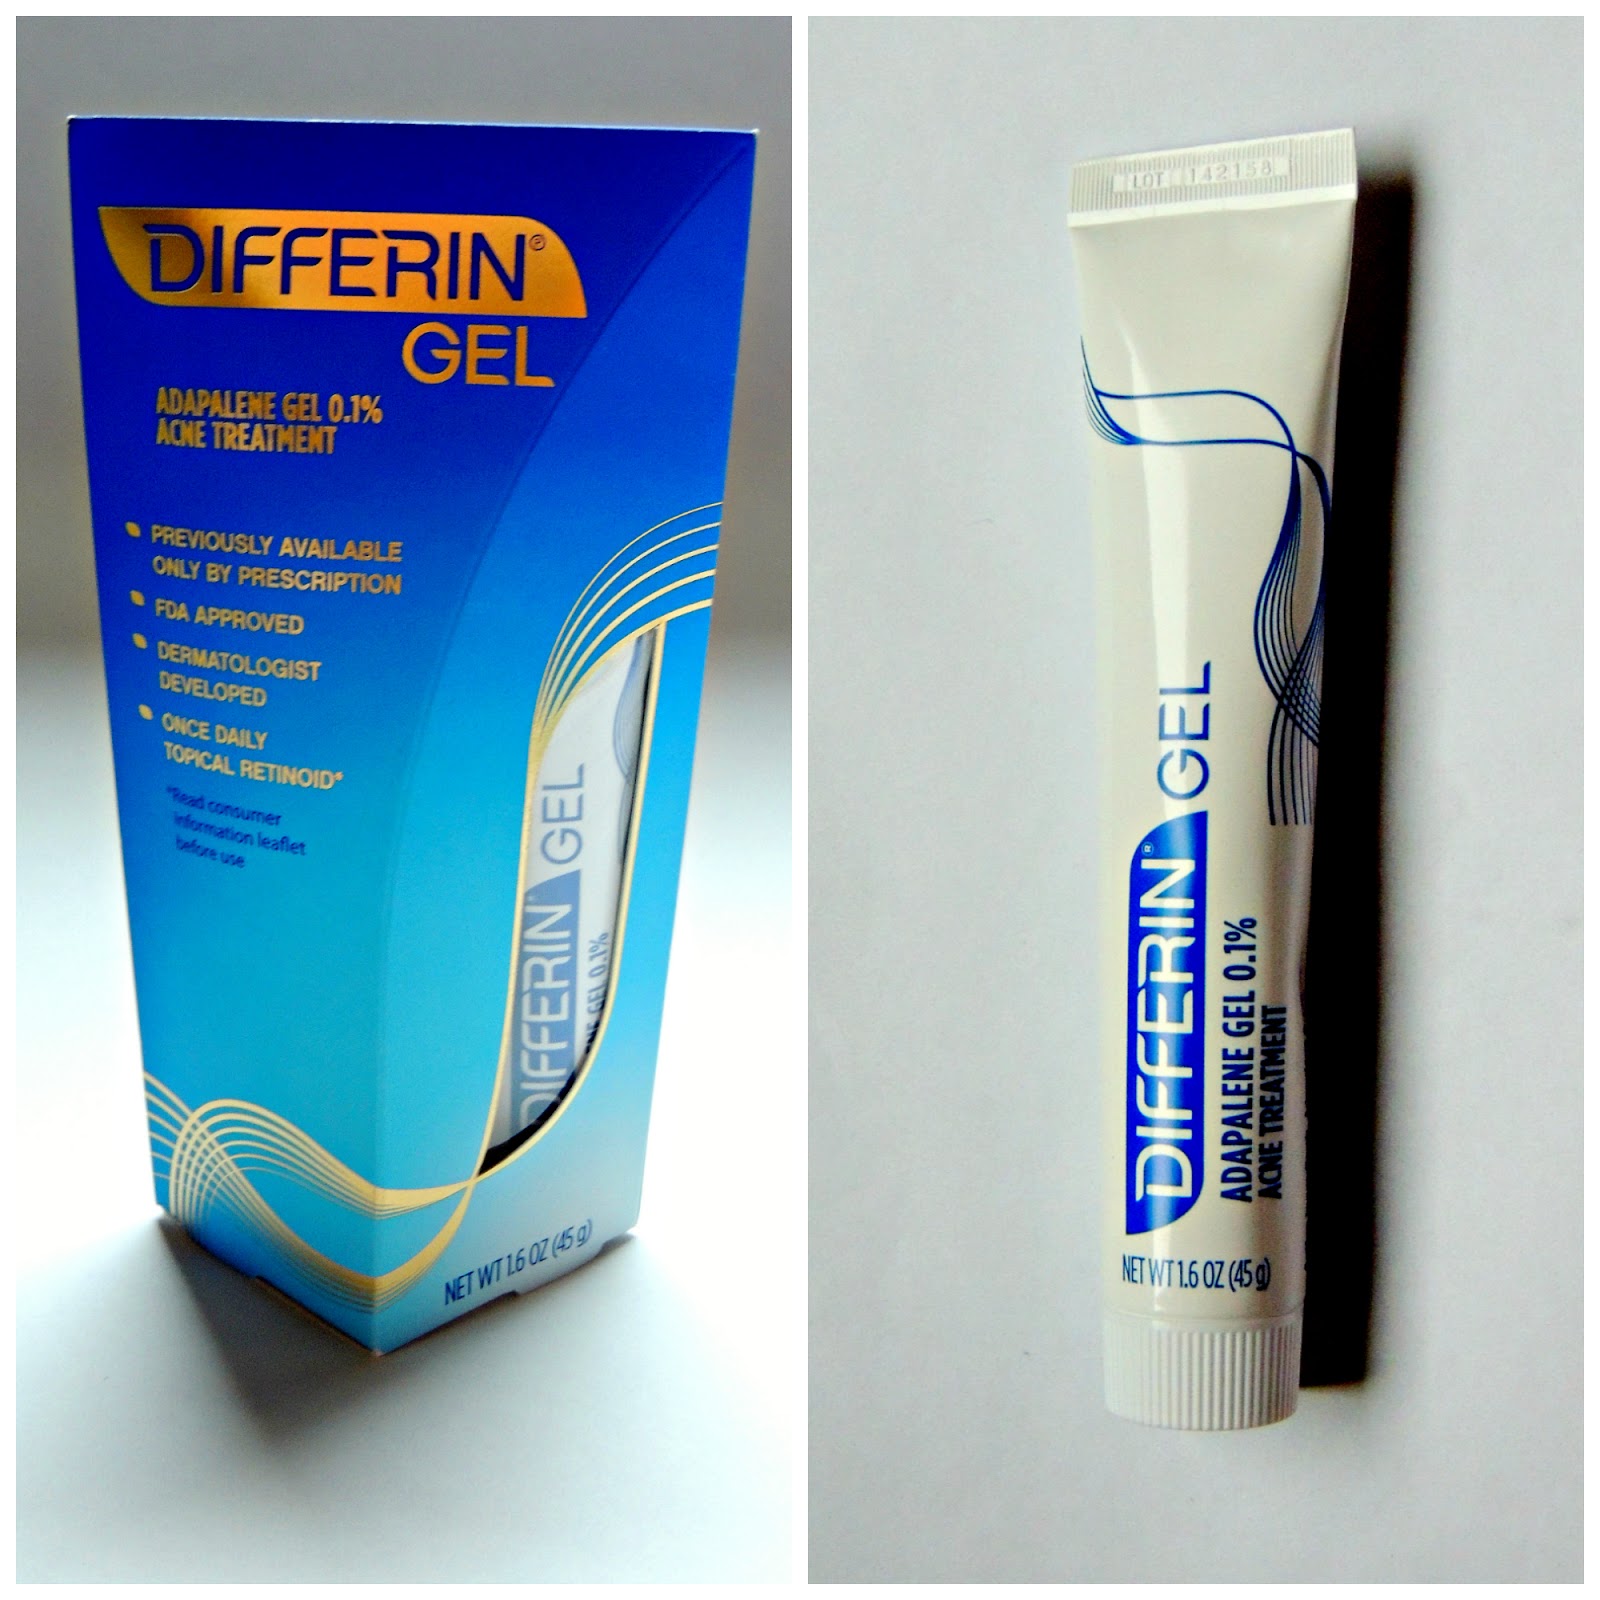 Differin® Gel 1.6 oz 45g tube collage #BeforeDifferinJourney #ad.jpg